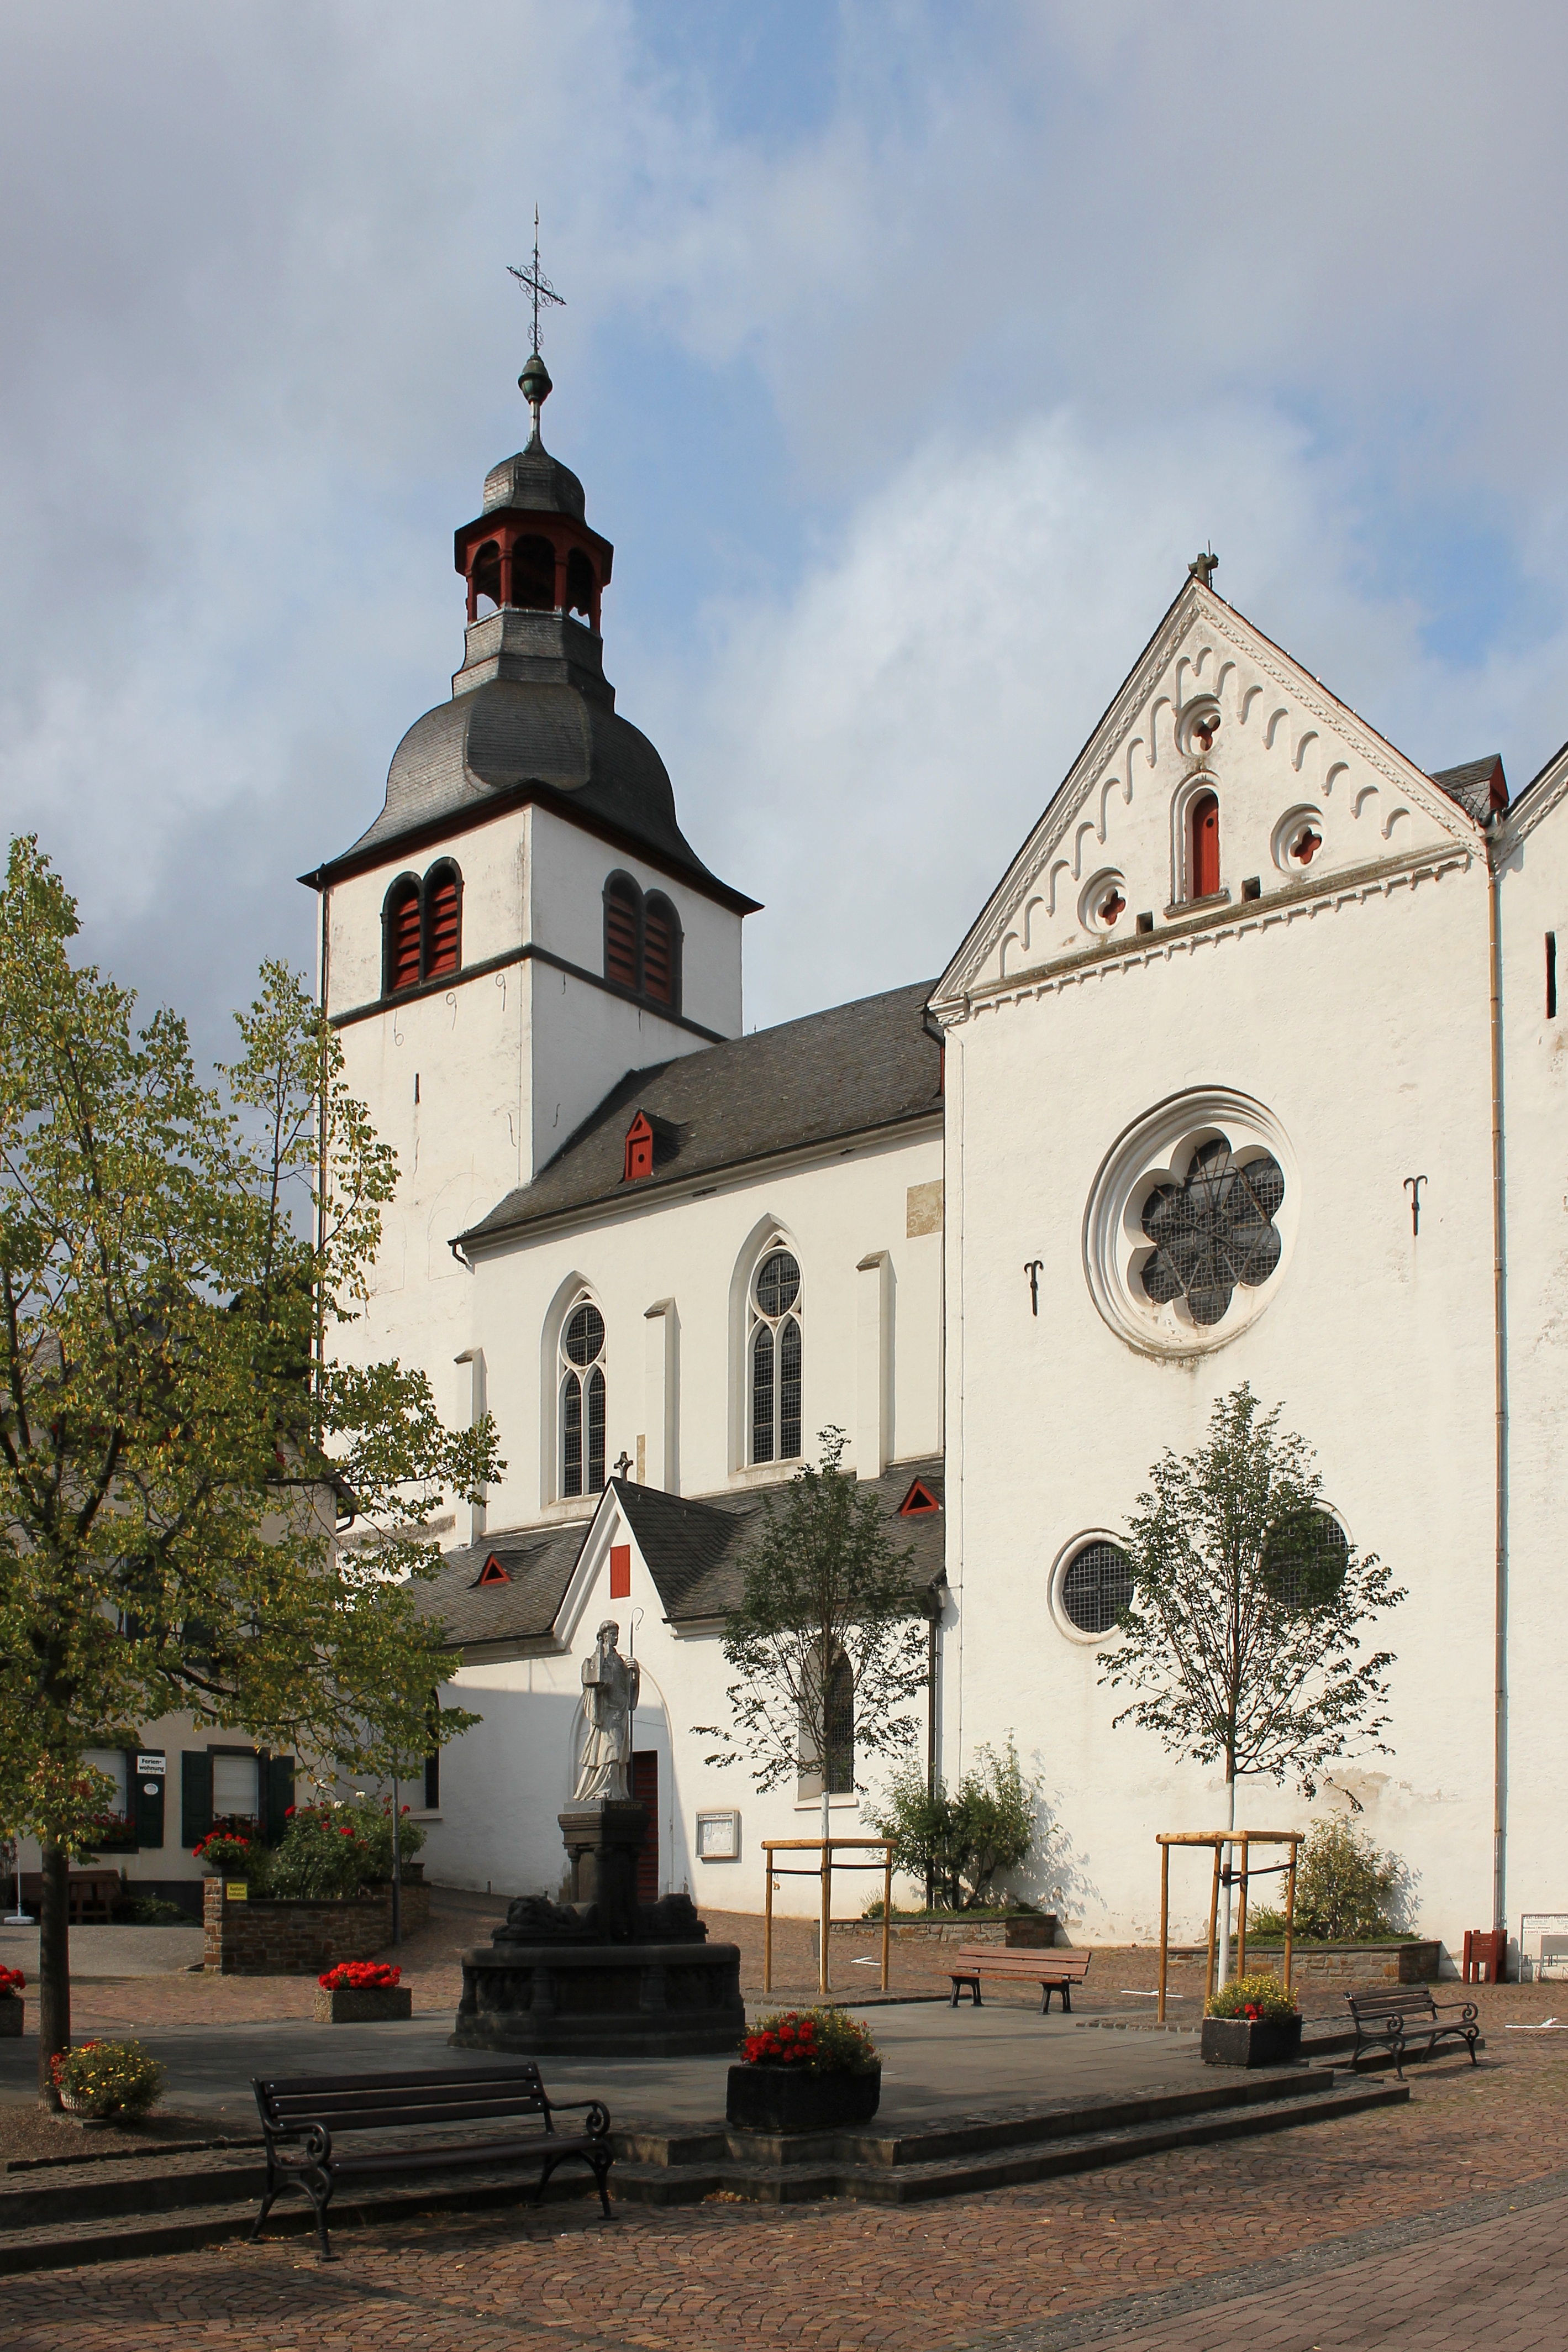 Karden, St. Castor, Lindenplatz (2018-08-27)